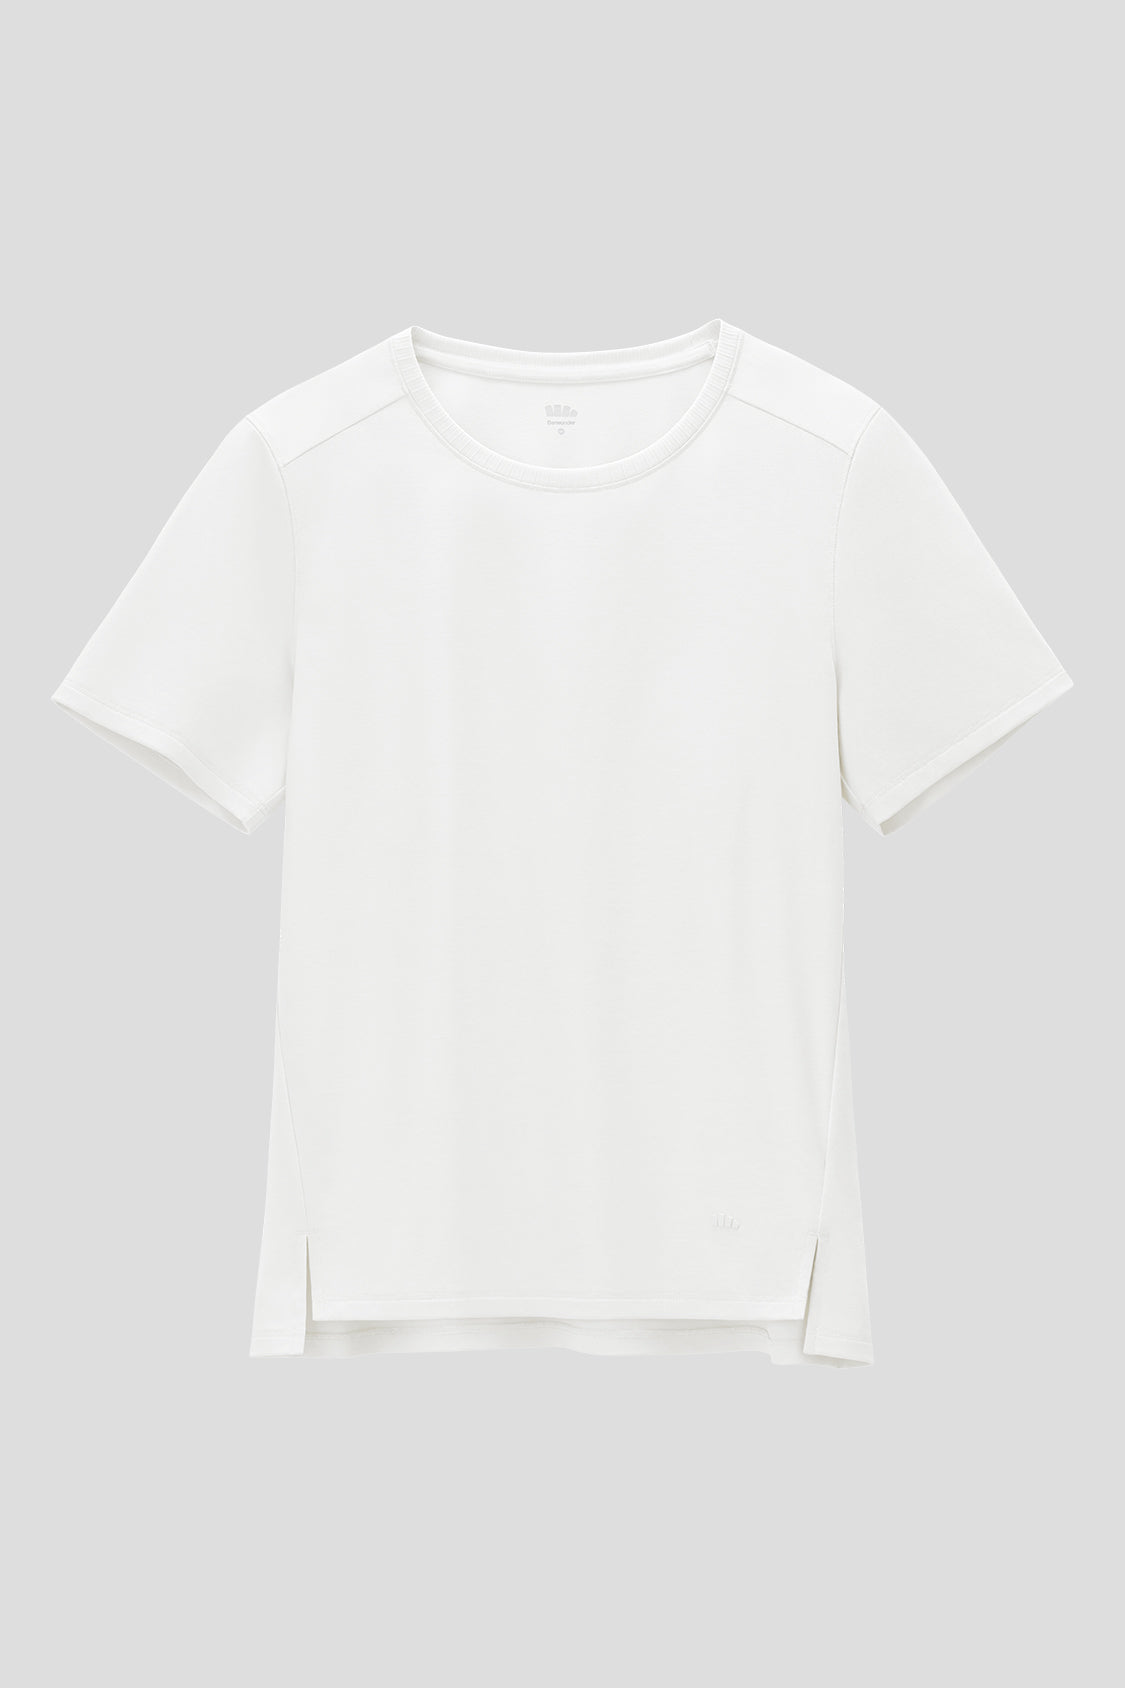 women's t shirt beneunder cooling uv sun protection t-shirt #color_creamy white